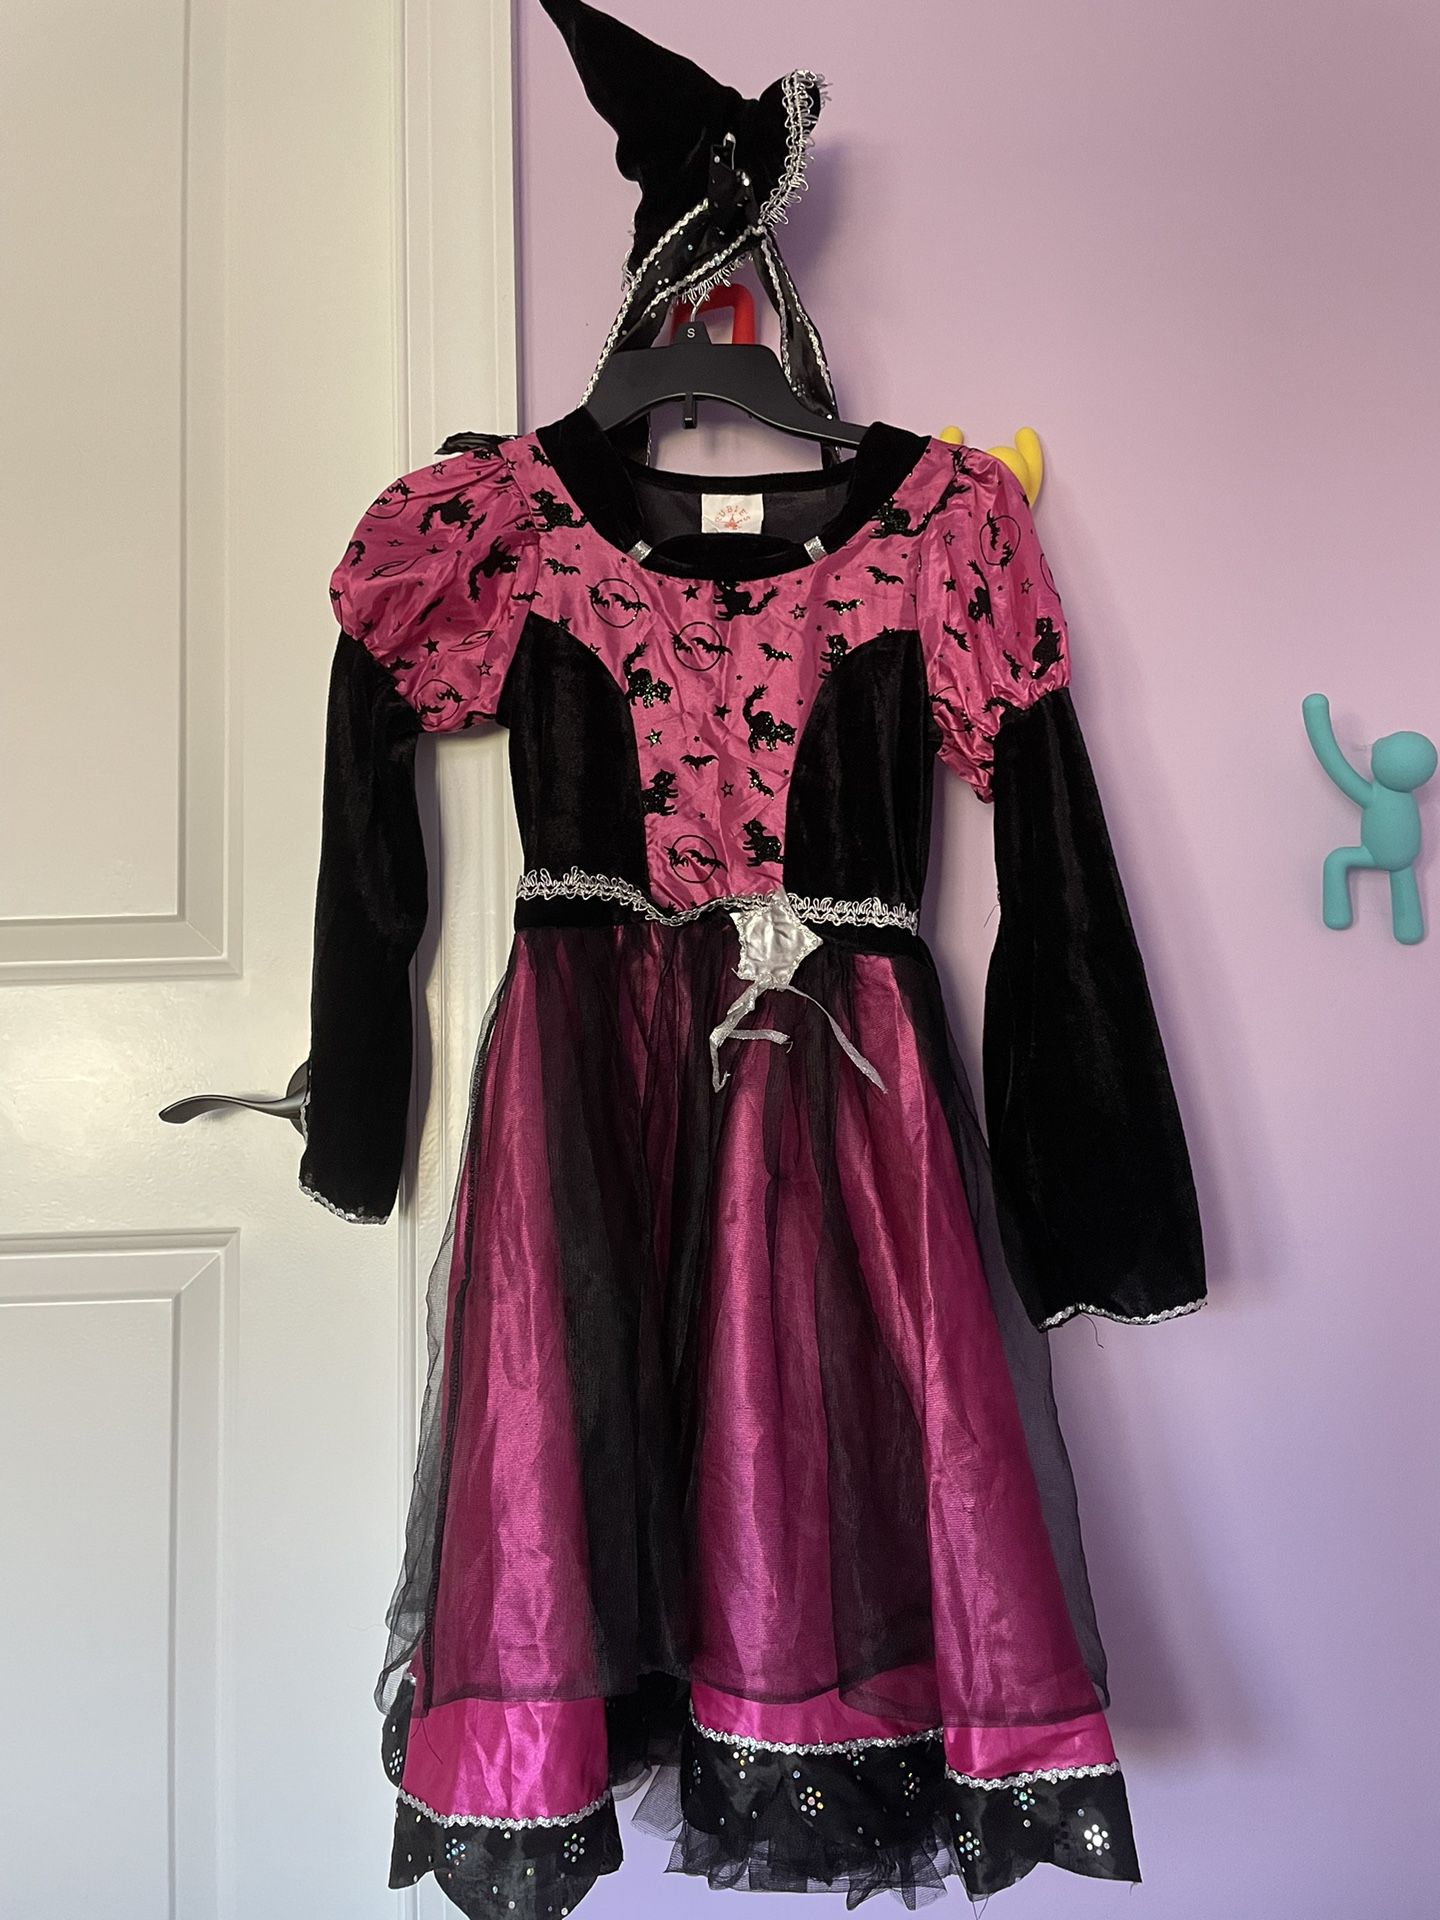 Girls Witch Halloween Costume Size: Medium (8-10)